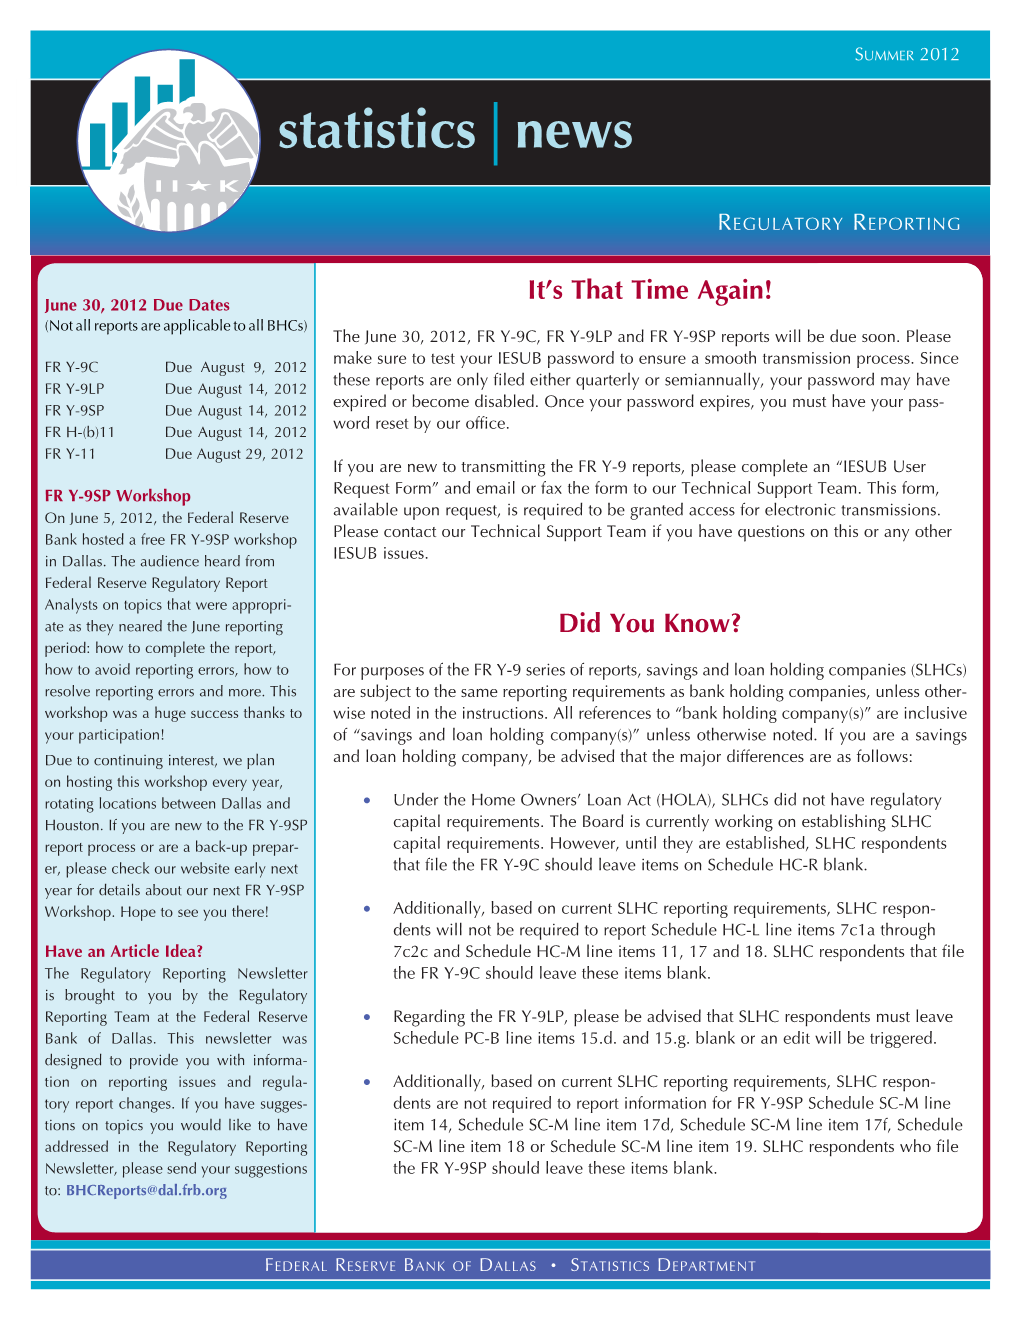 Regulatory Reporting Newsletter, Summer 2012